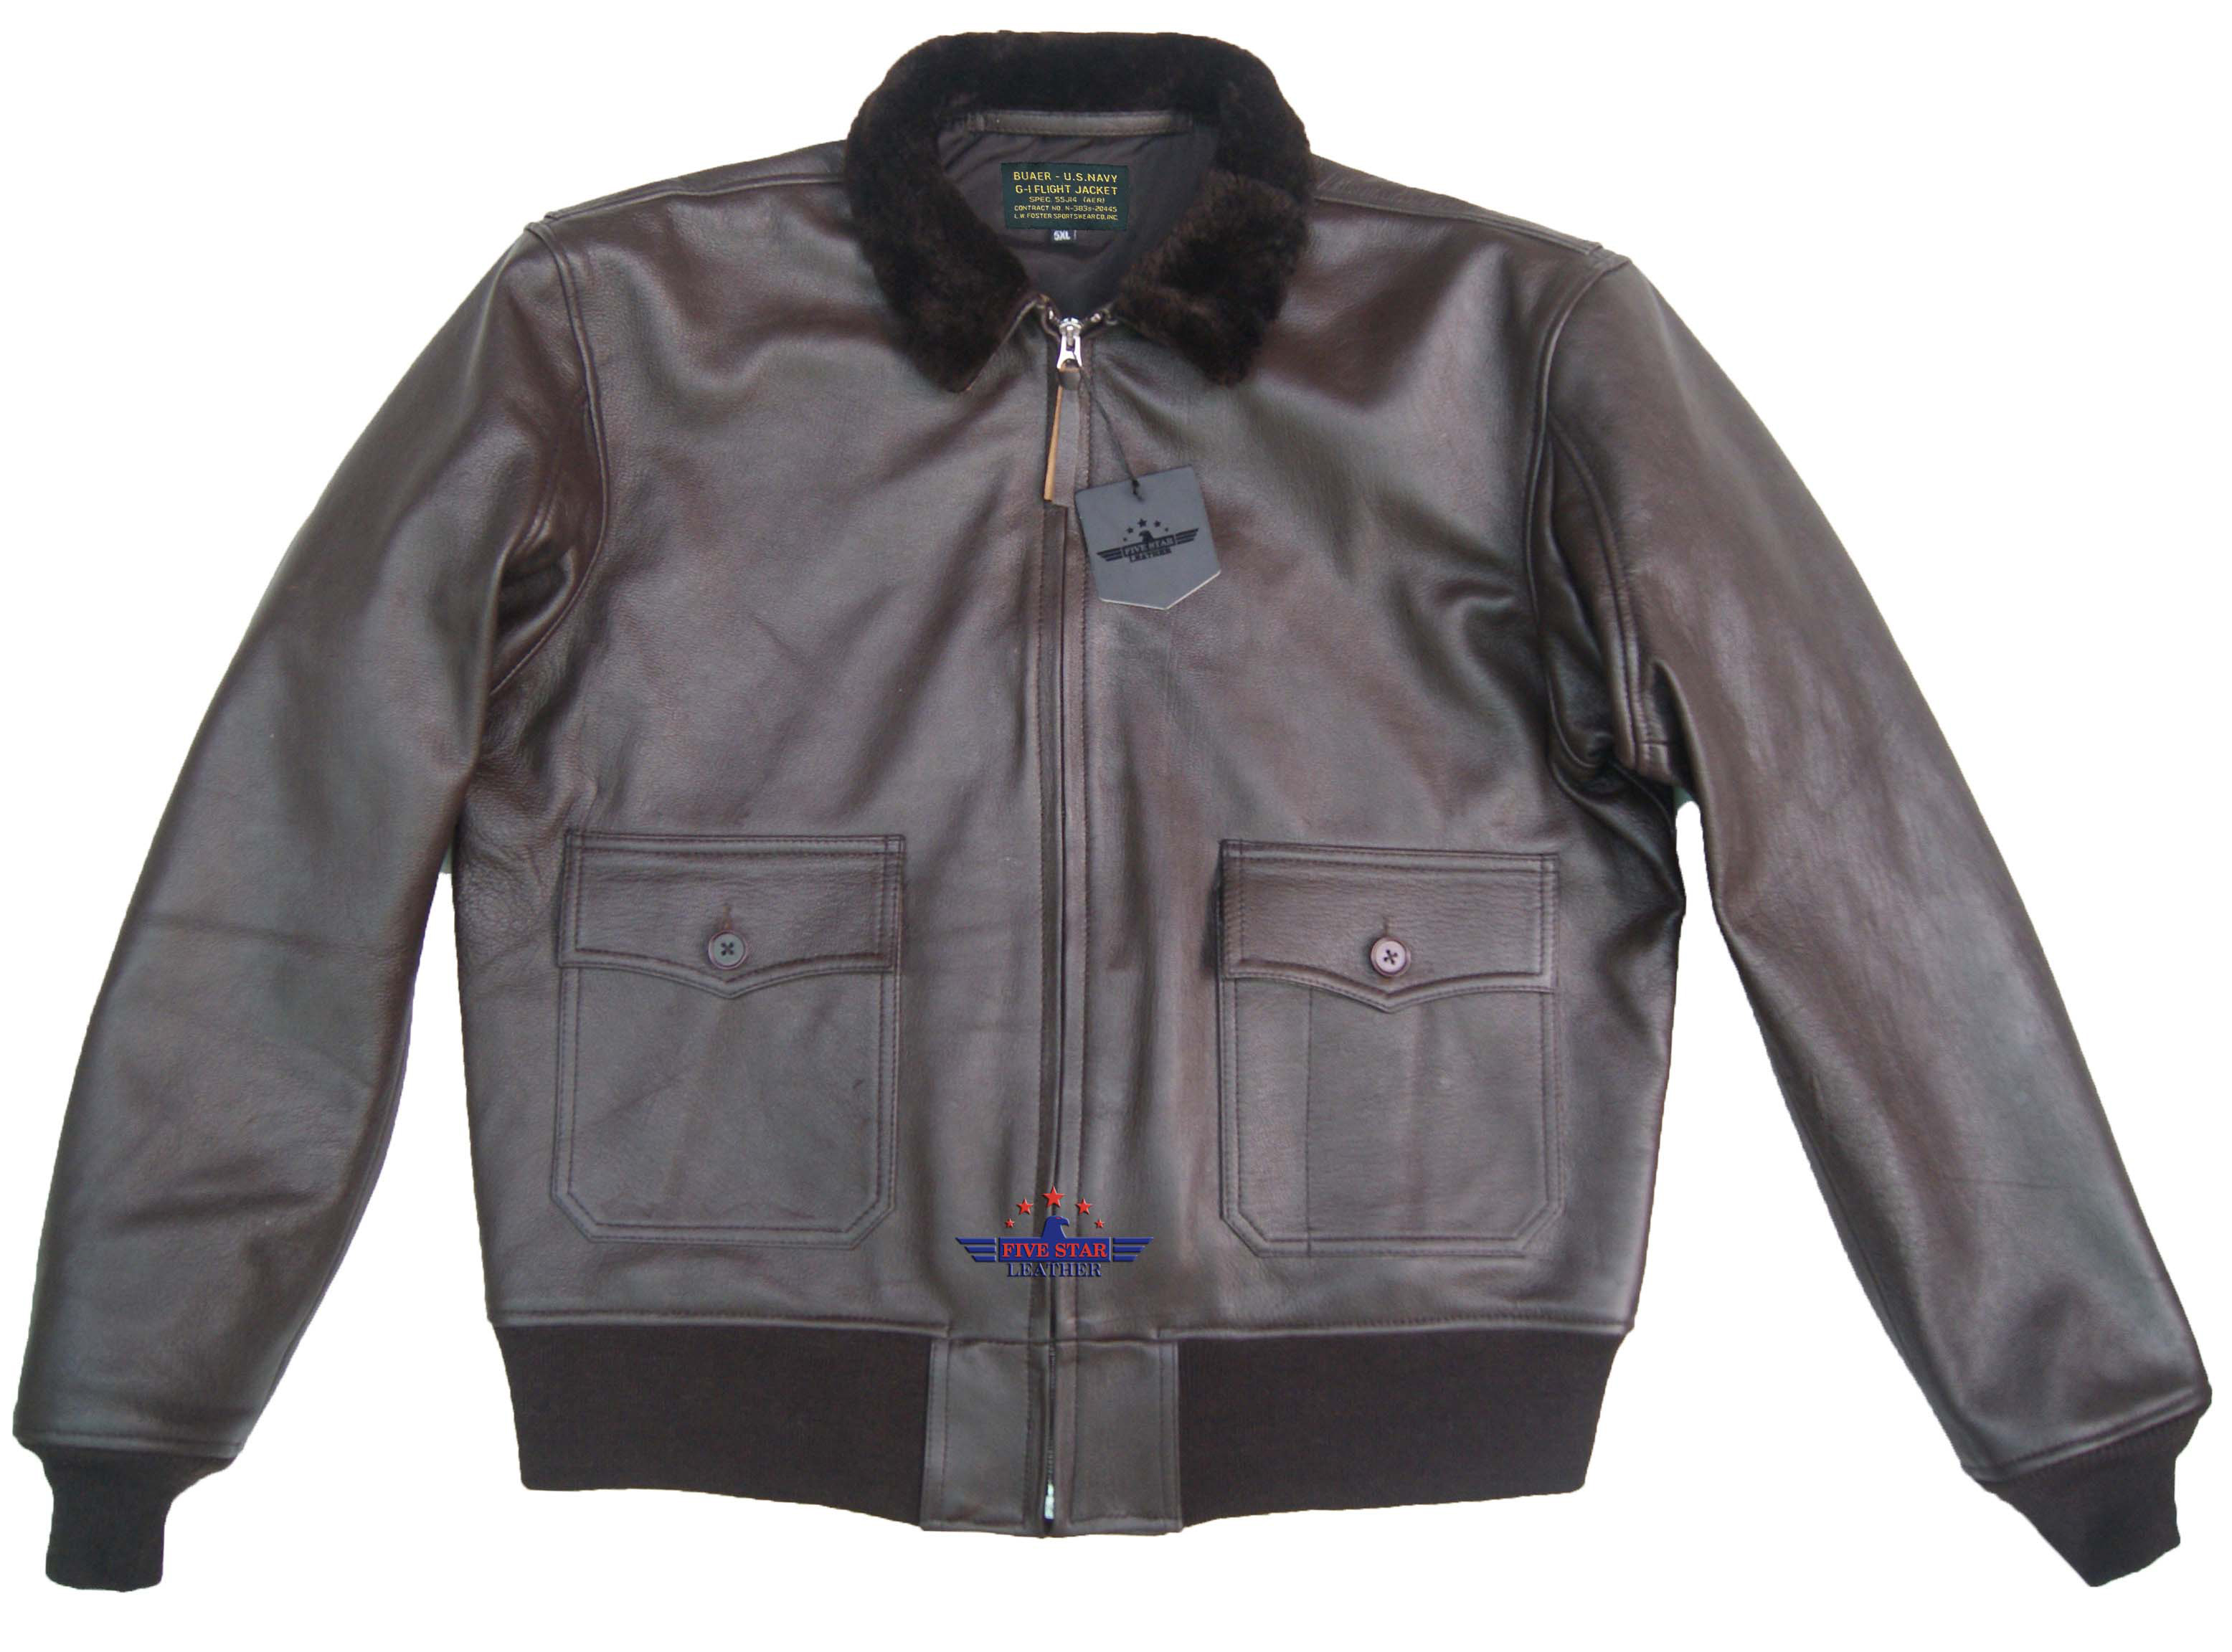 FIVESTAR LEATHER G1 JACKET | Page 7 | Vintage Leather Jackets Forum